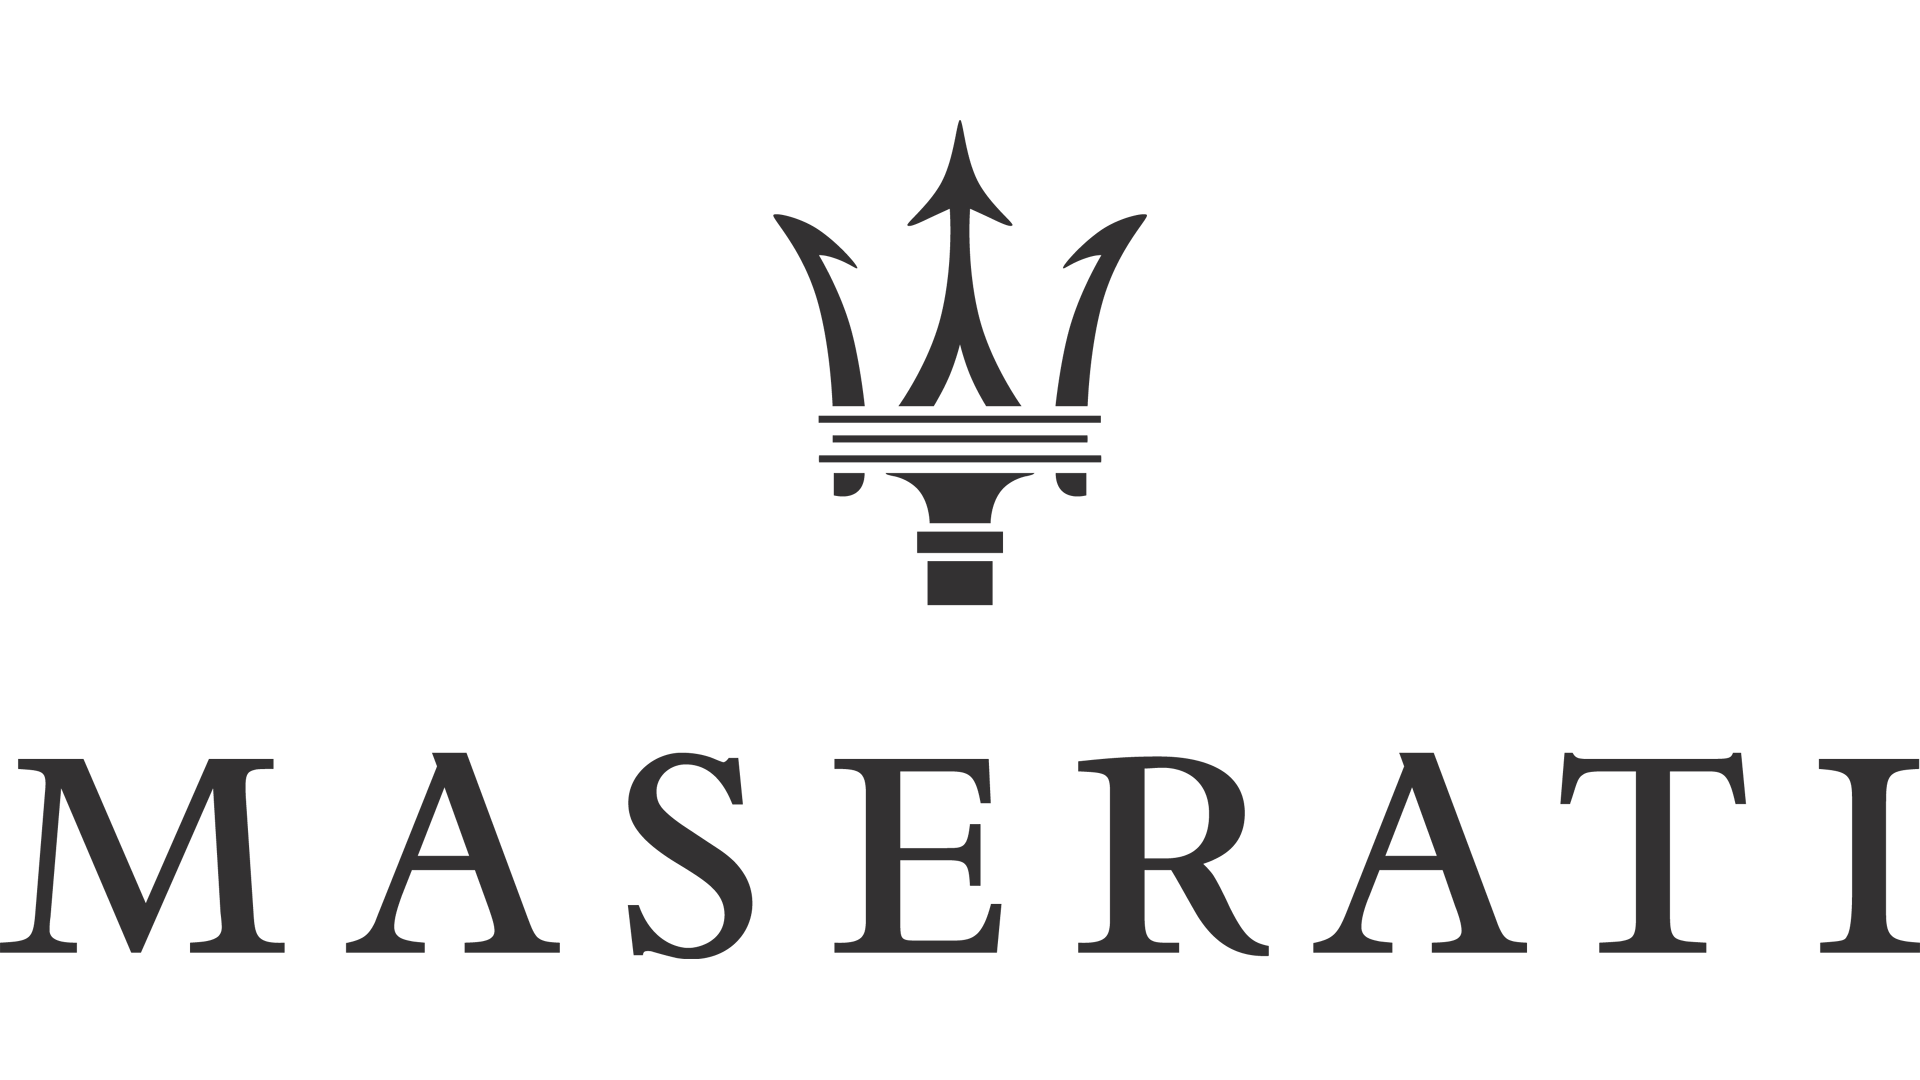 Maserati-logo-black-1920x1080.png